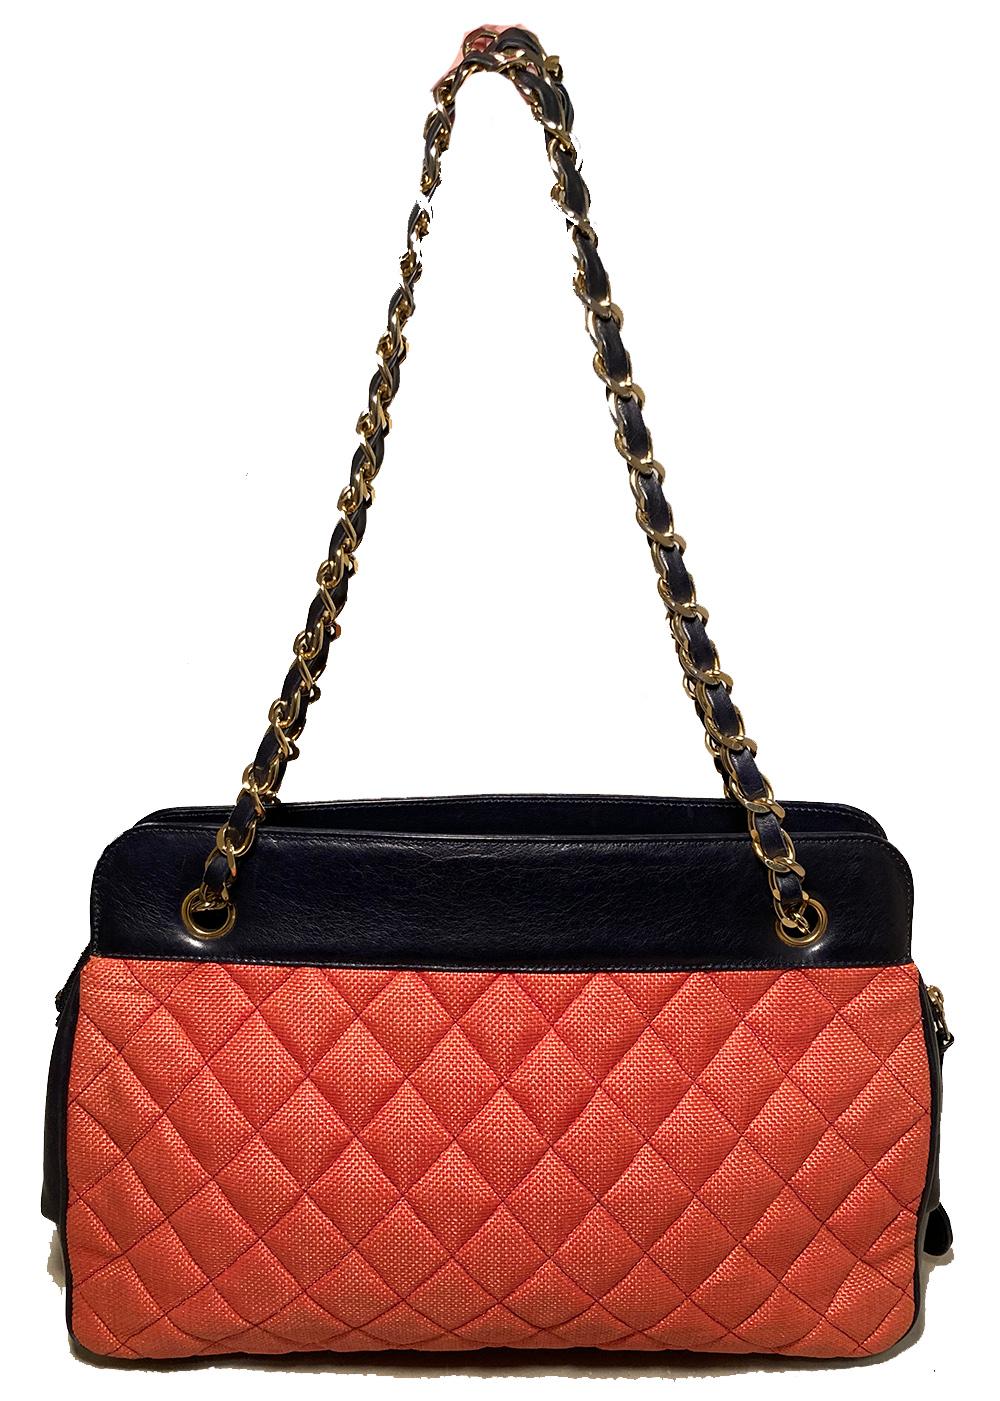 Vintage Chanel Woven Raffia and Leather Shoulder Bag Tote 2